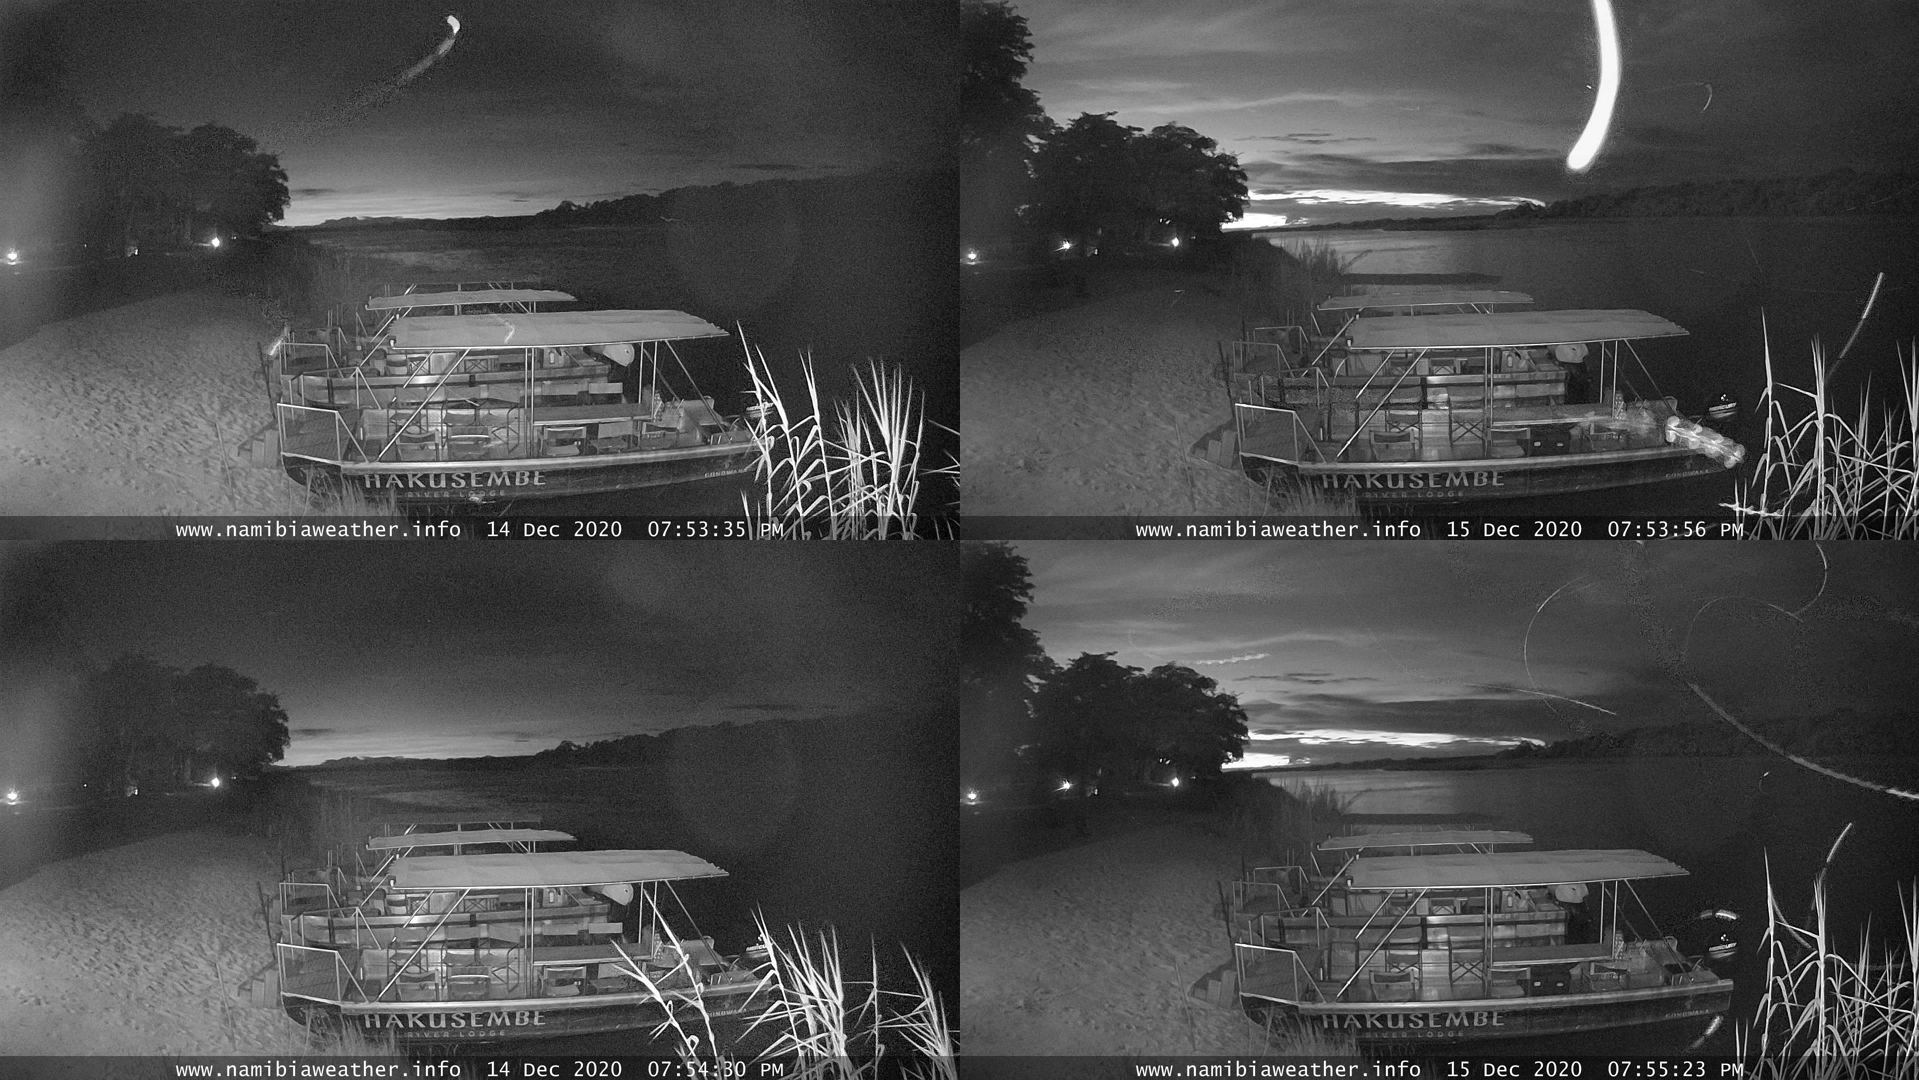 Hakusembe River Lodge webcam solar eclipse below the horizon 2020 2